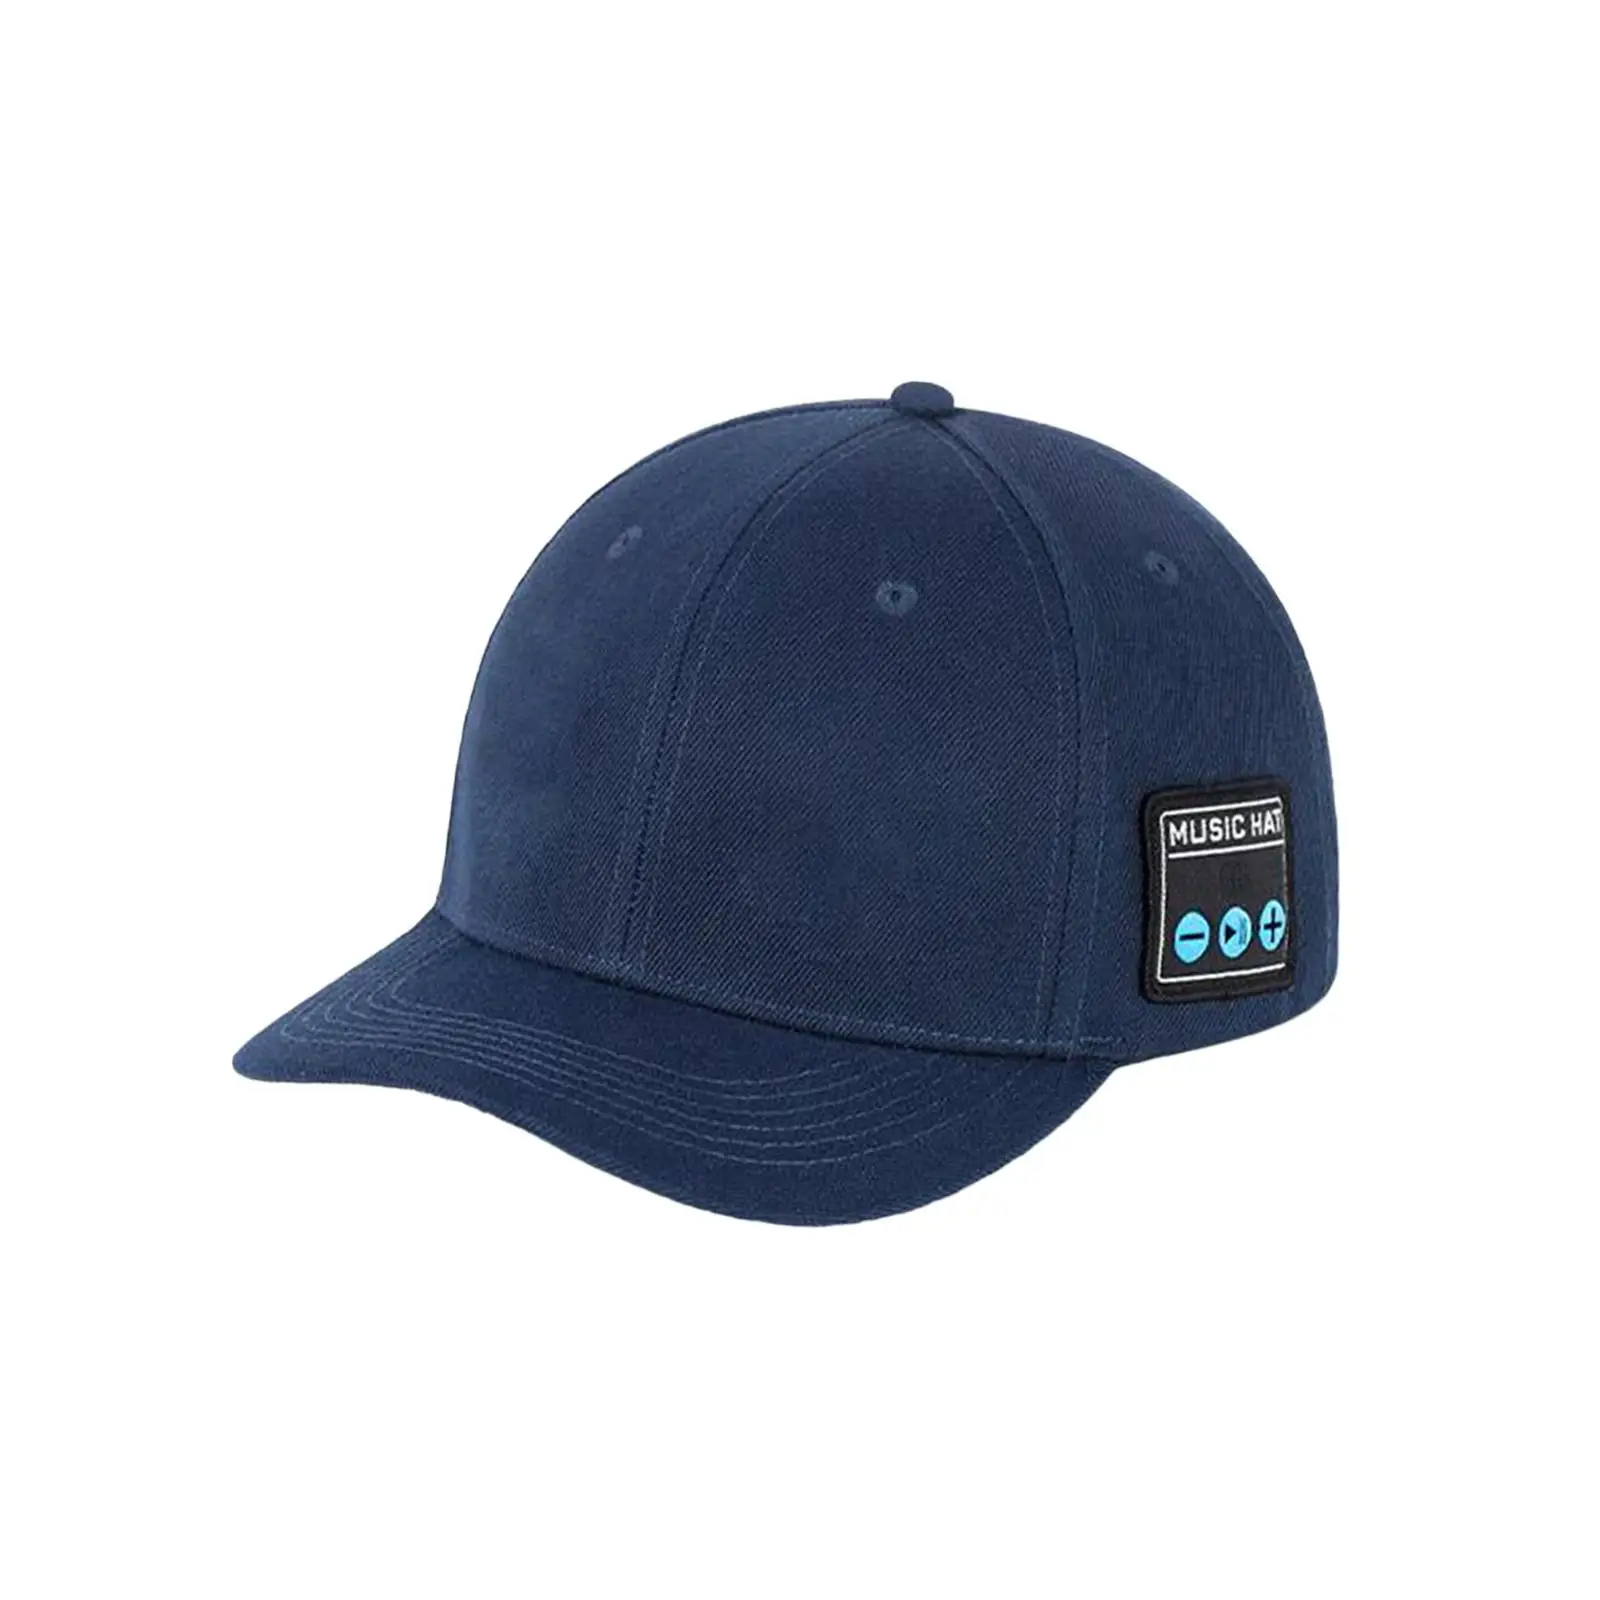 Bluetooth Speaker Hat Comfortable Portable Sun Protection Stable Connection Outdoor Sport Baseball Cap for Boys Men Girls Women